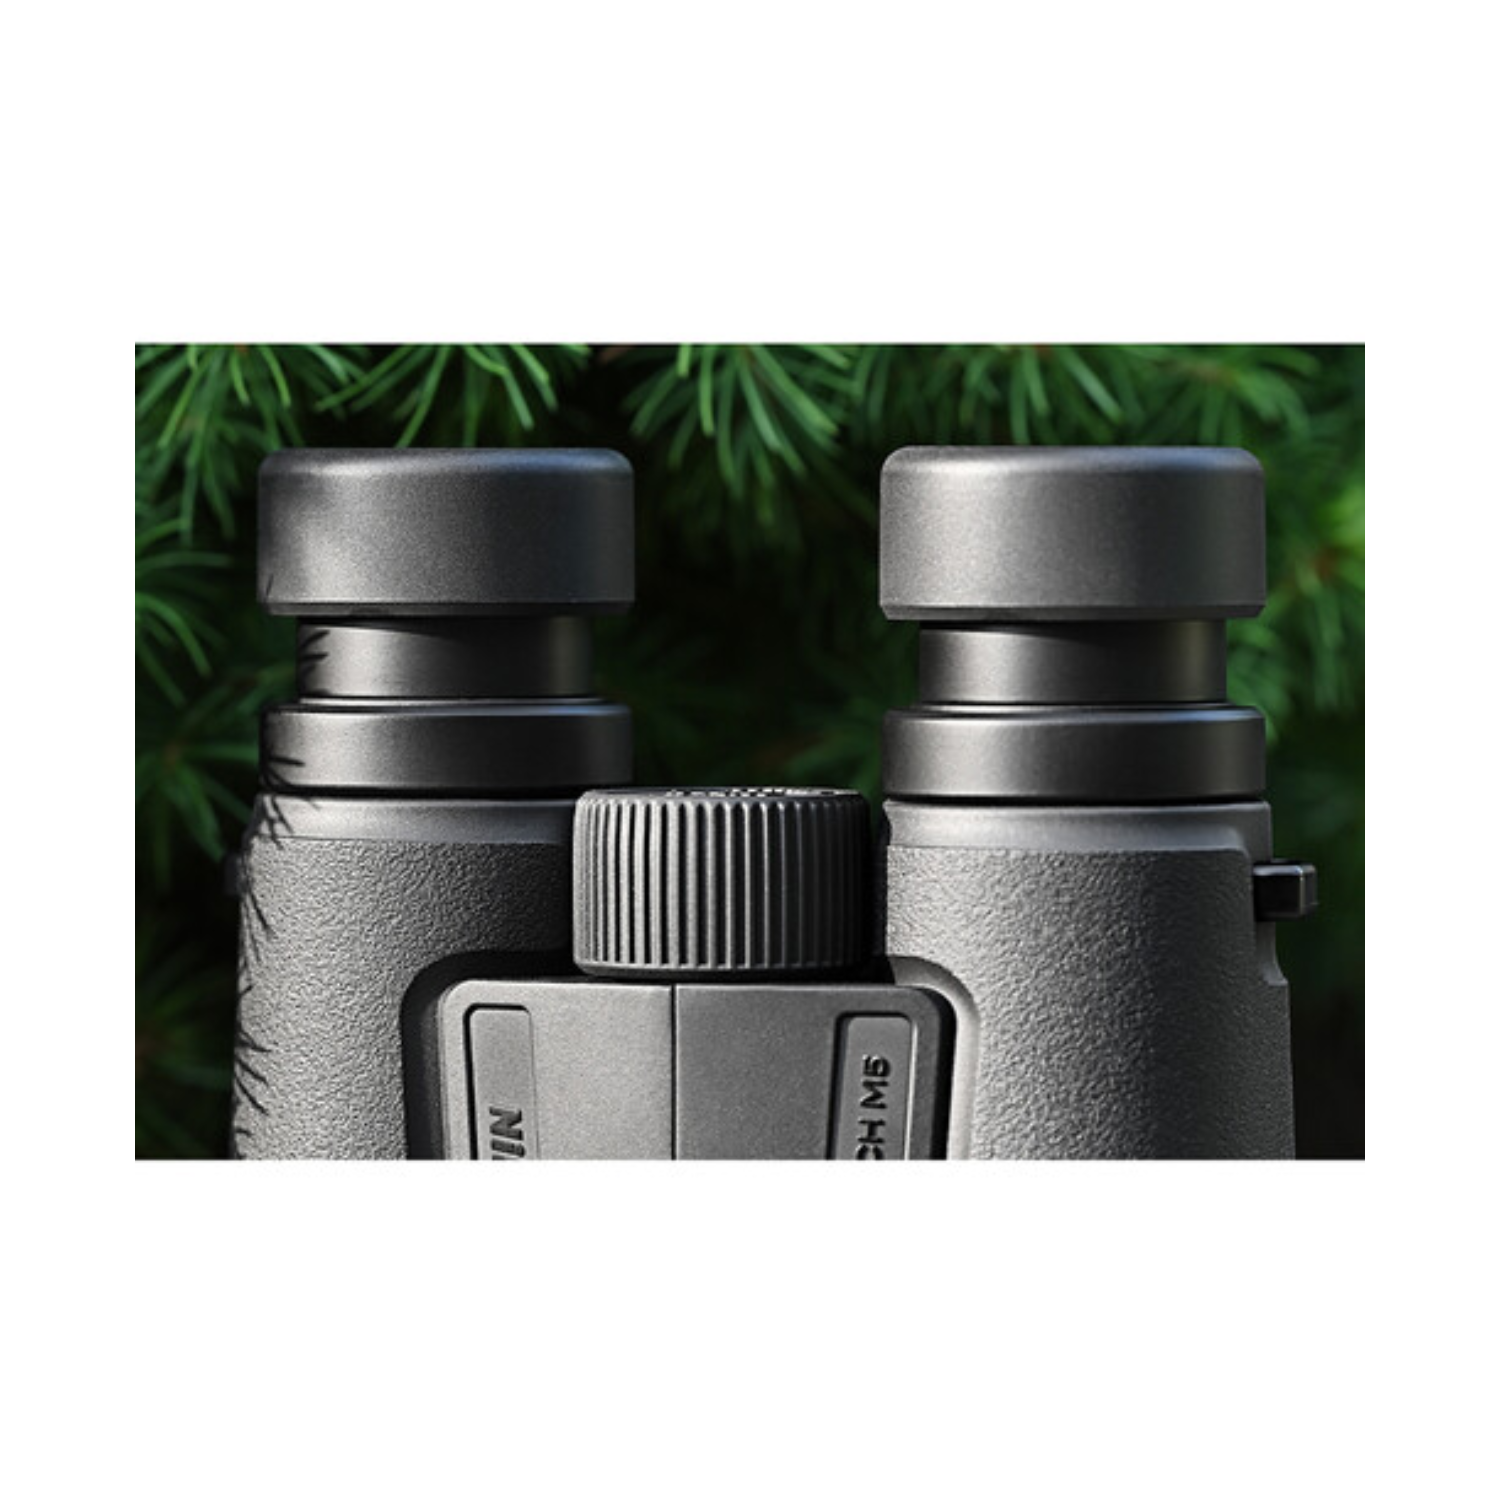 Nikon Monarch M5 12x42 Binoculars